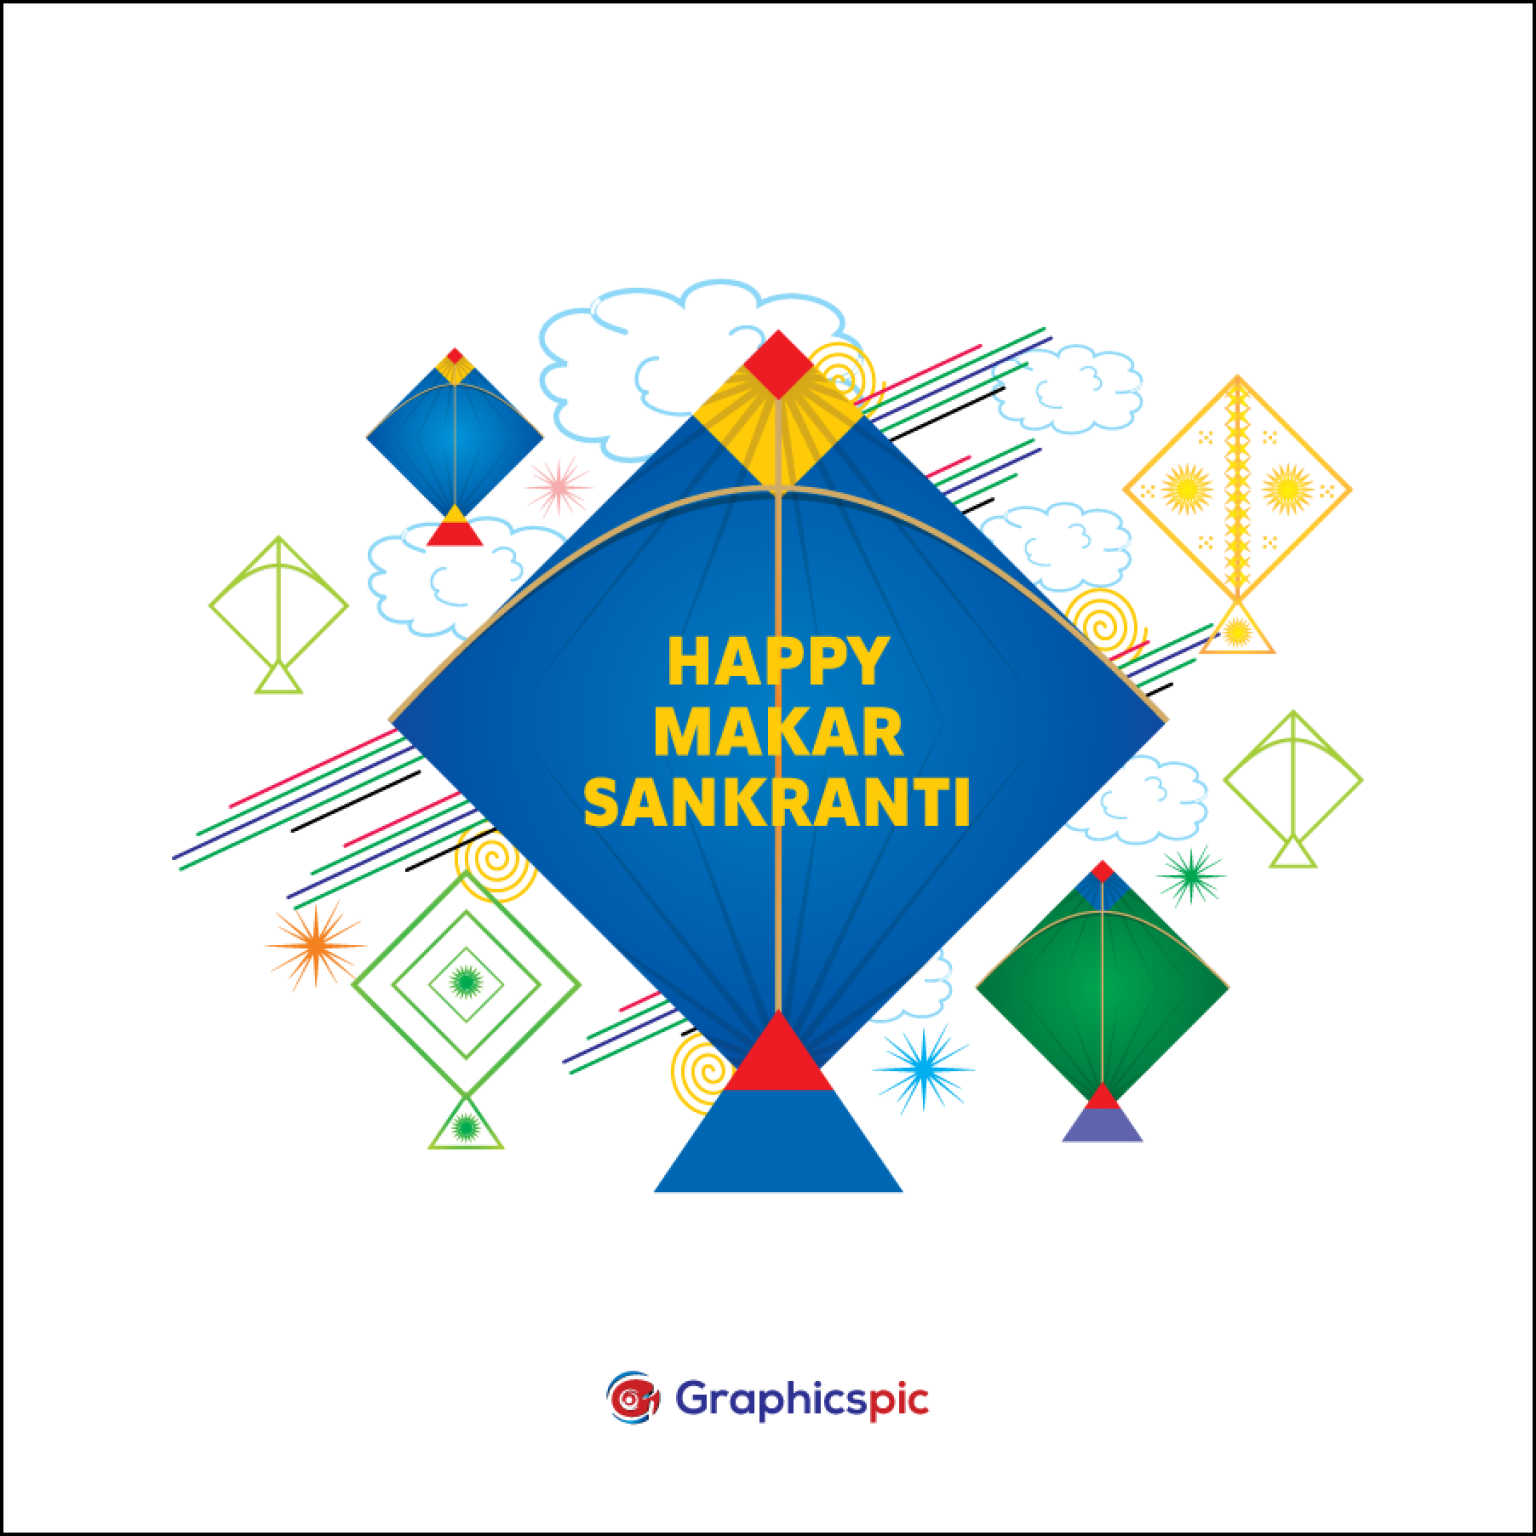 Happy Makar Sankranti Festival Post Card With Colorful Kites Free